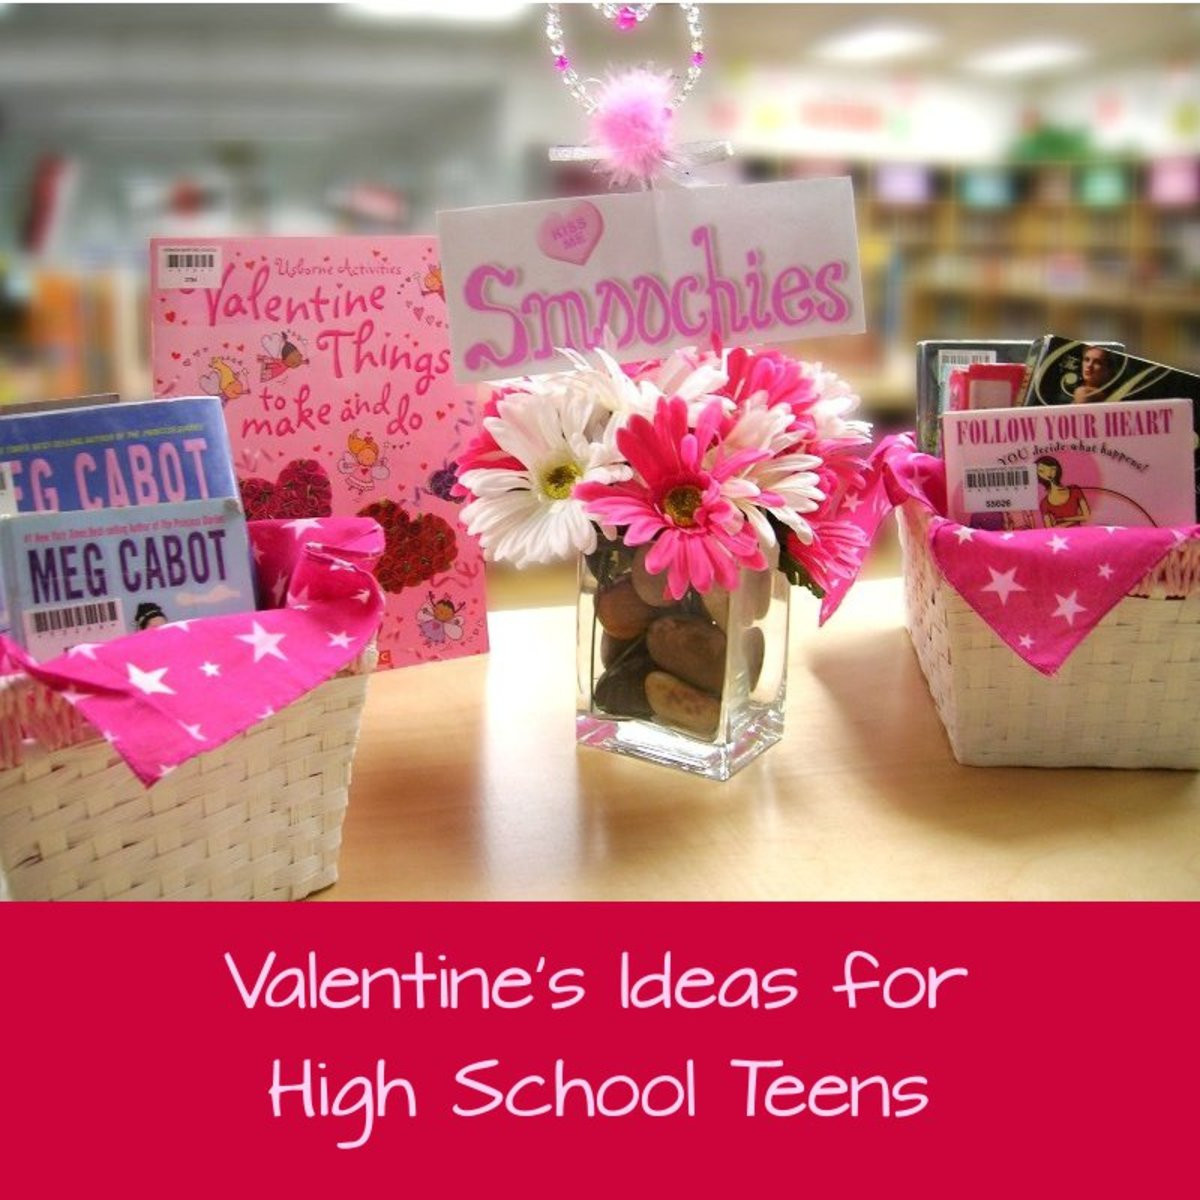 Valentines Day Gift Ideas For Teens
 Valentine s Day Gift Ideas for High School Teens